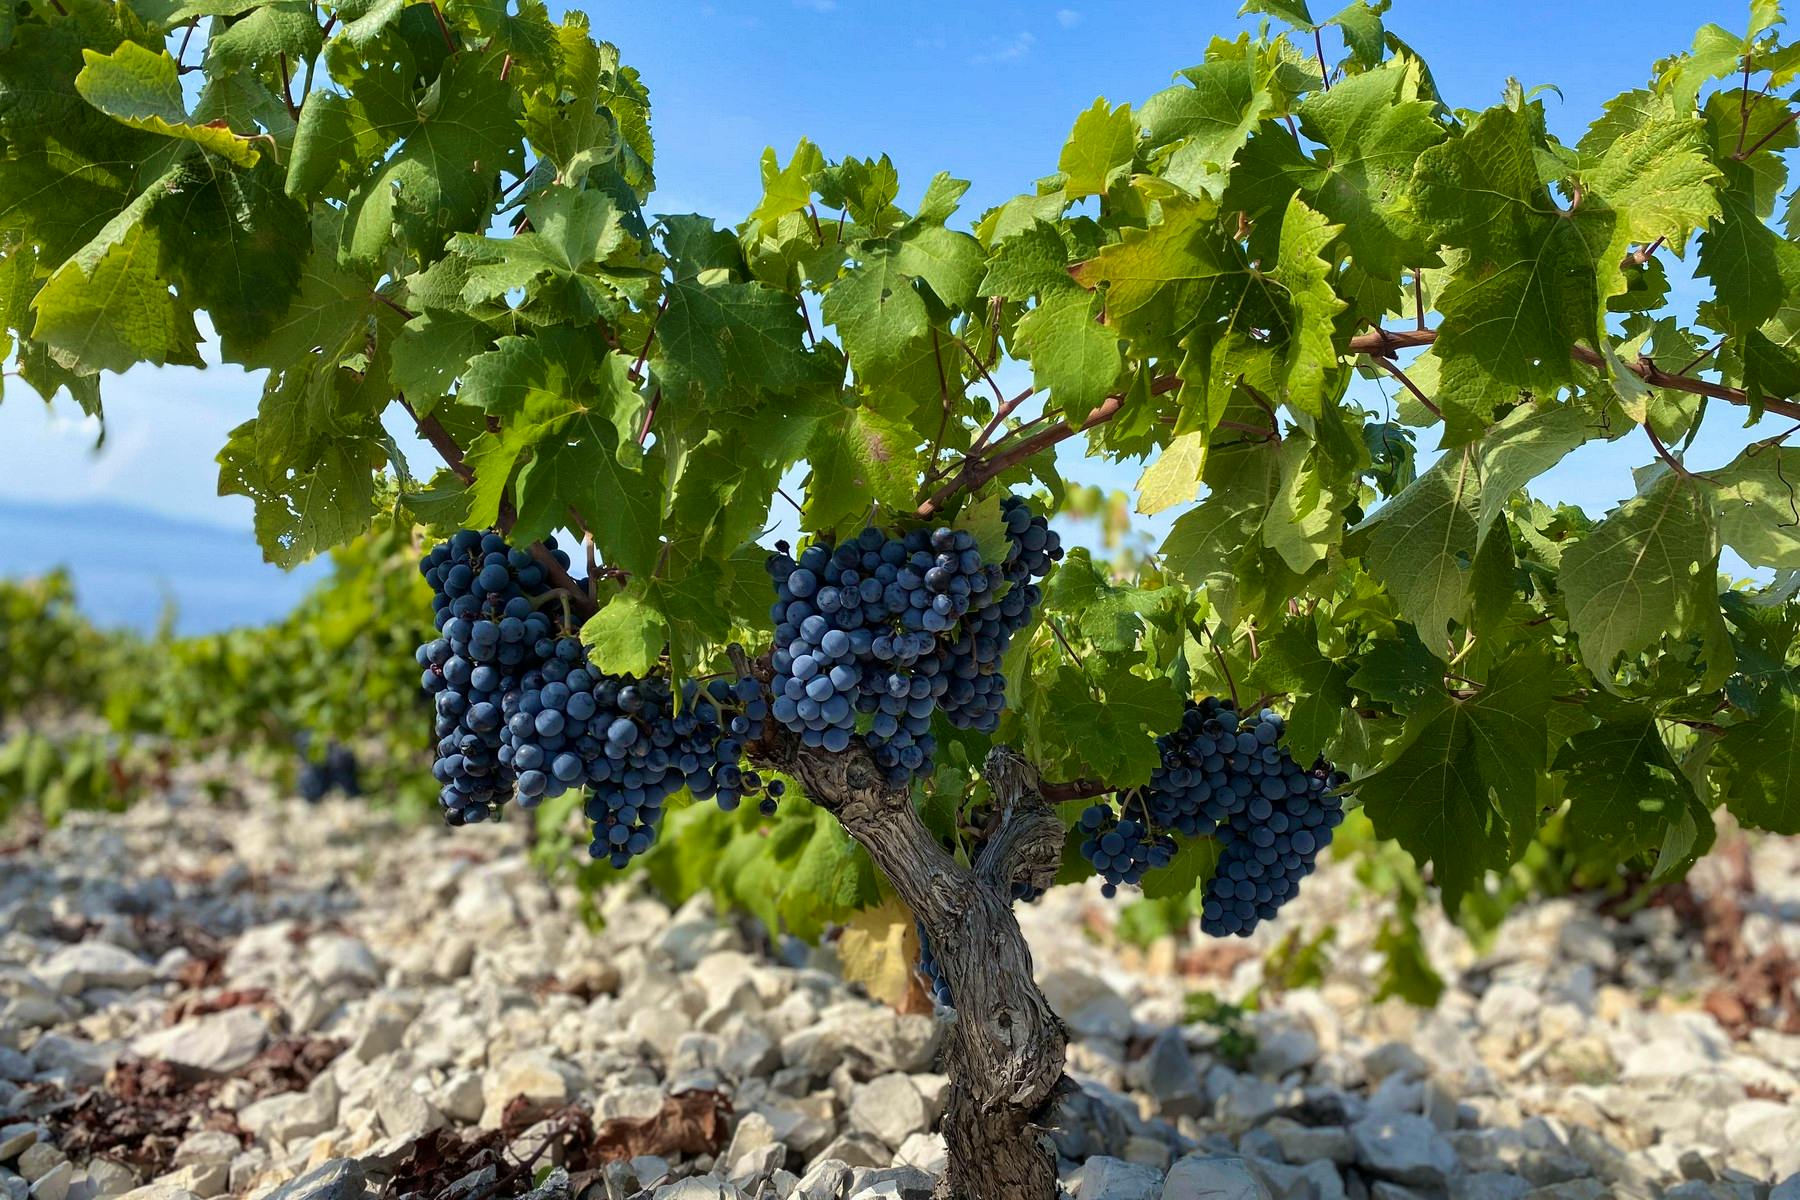 Plavac mali grape variety